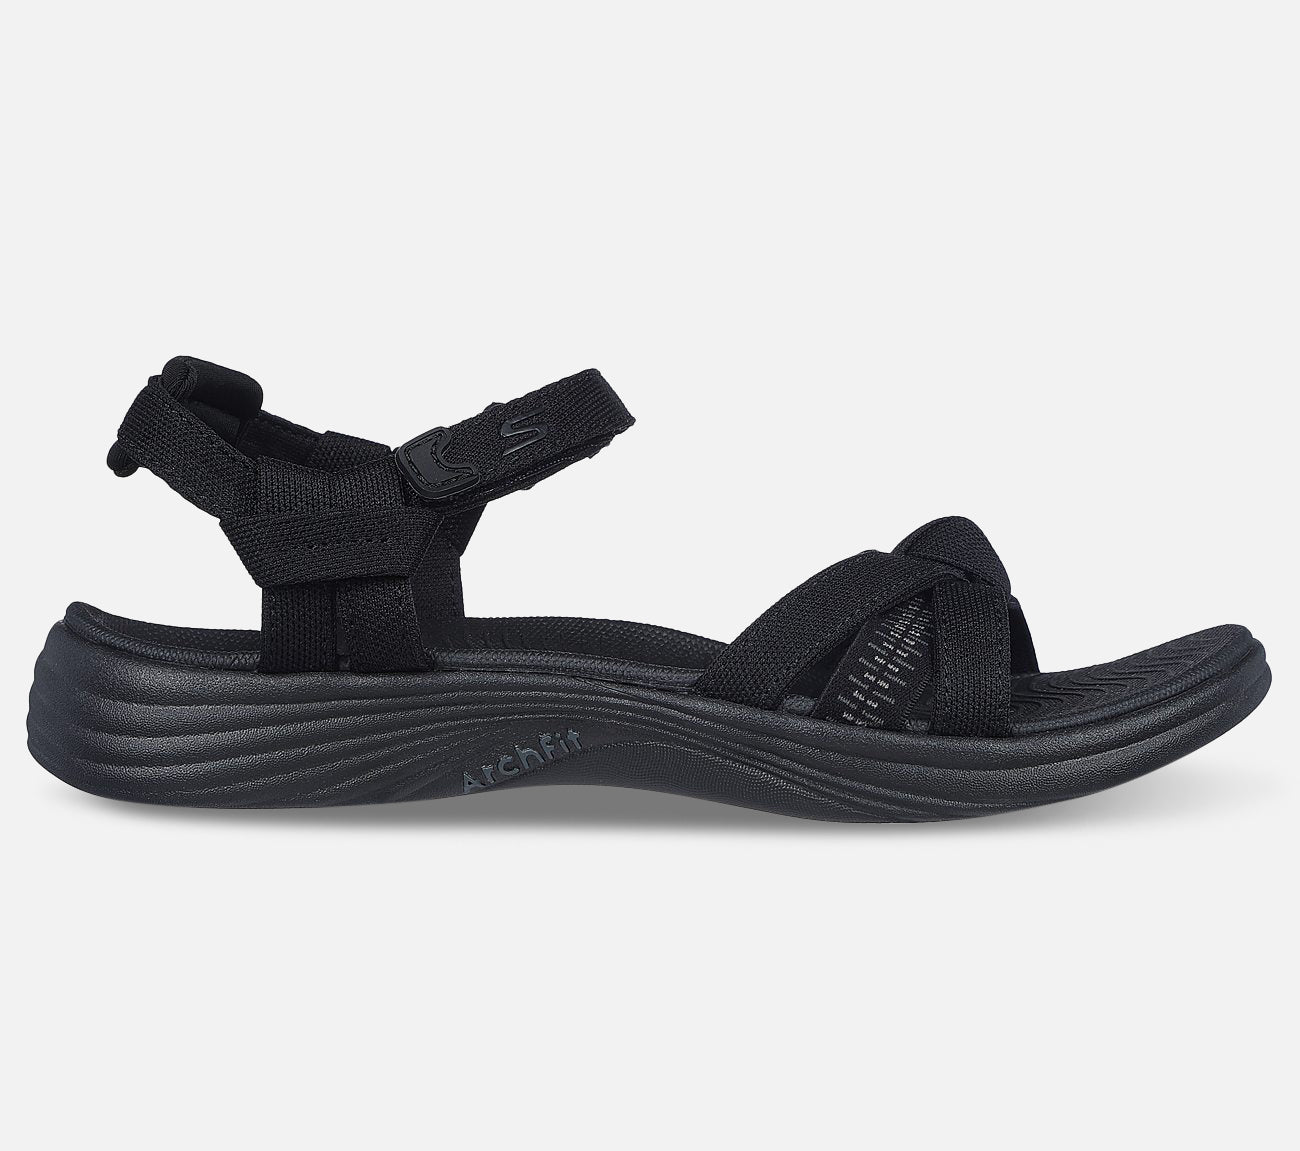 Arch Fit Radiance - Sensational Sandal Skechers